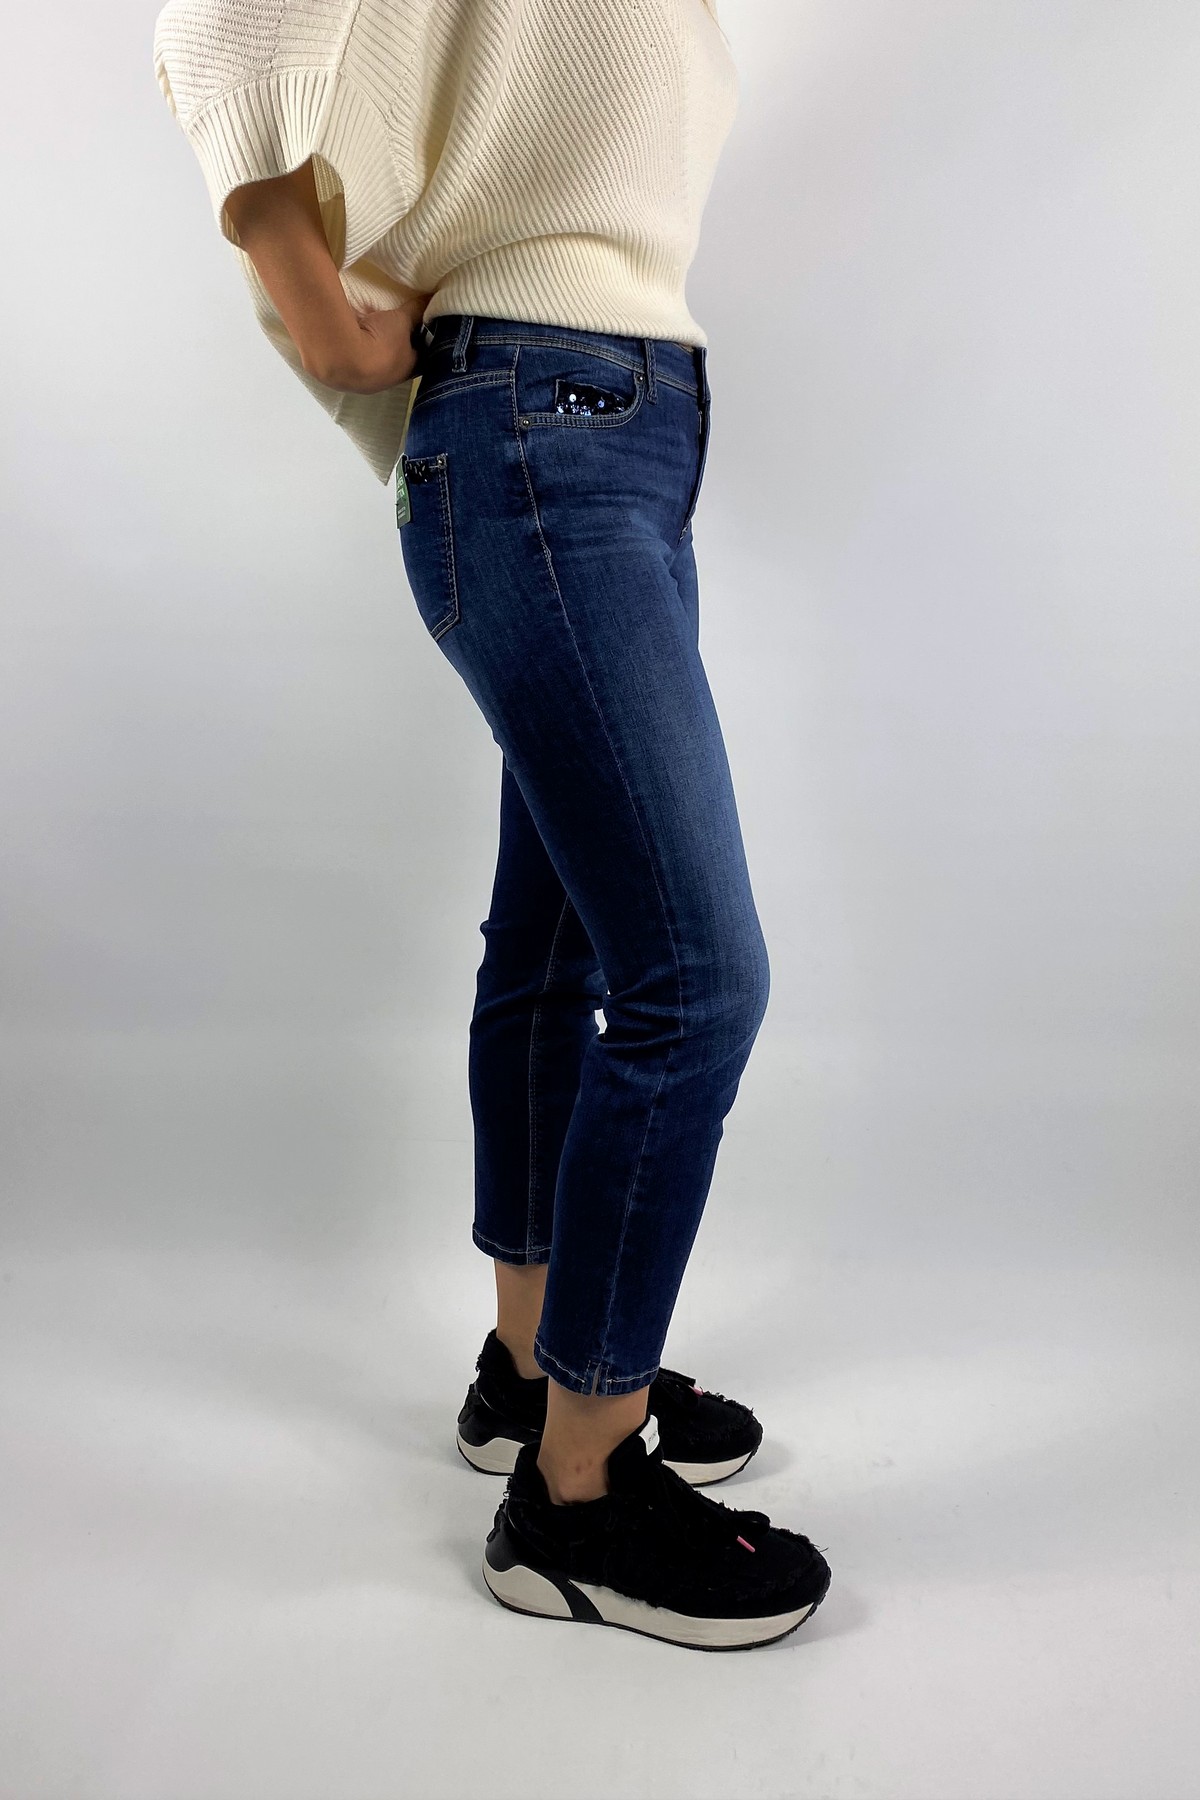 Cambio - Piper short 9182 - Jeans feminine superstretch blauw